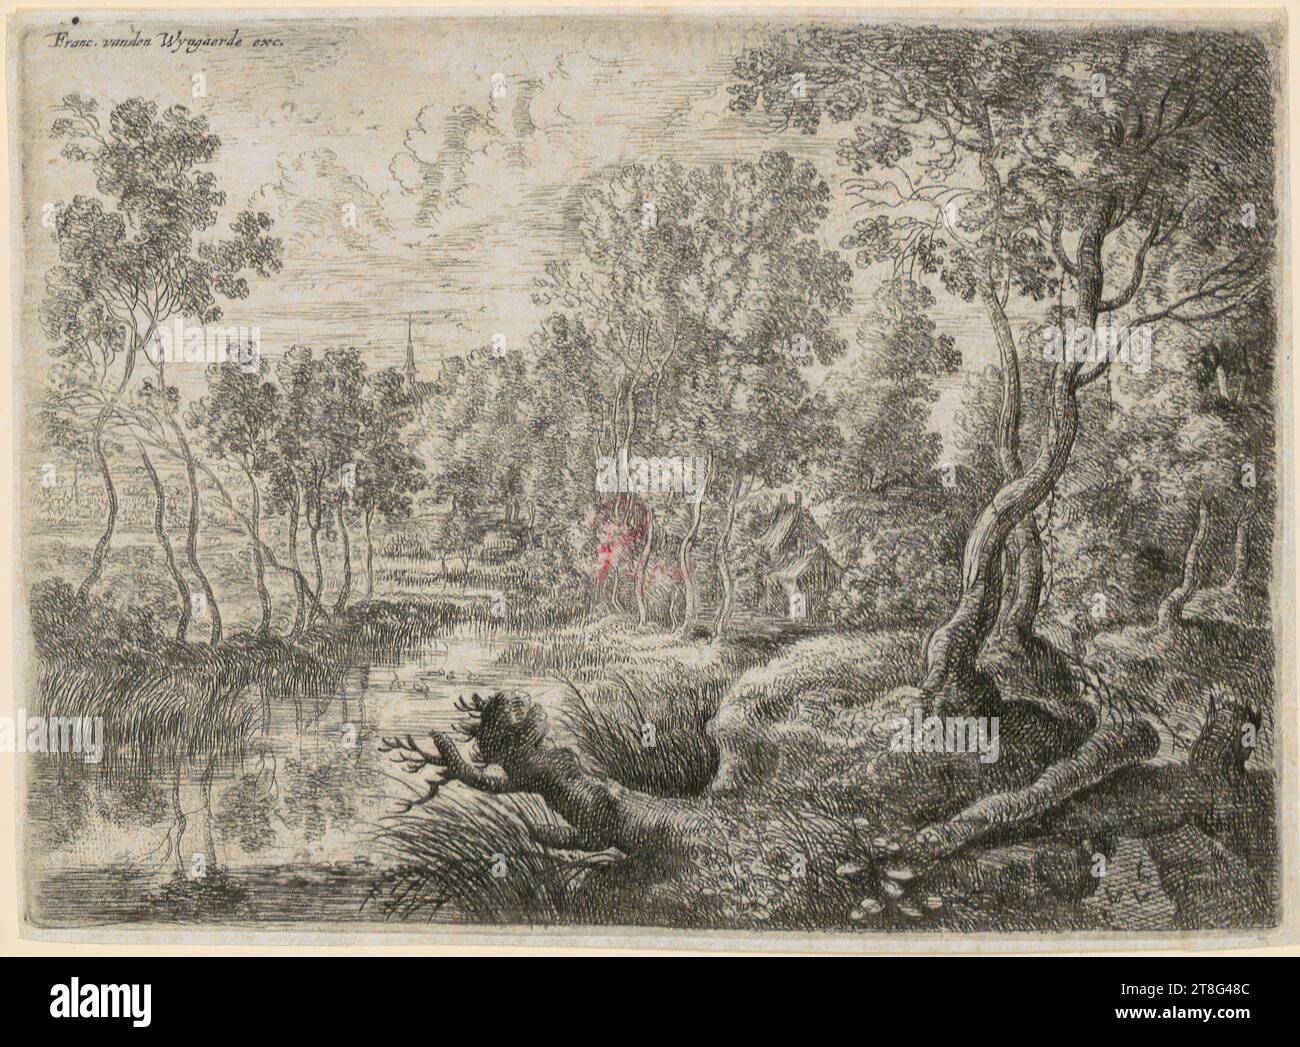 Lucas van Uden (1595 - 1672)Frans van den Wyngaerde (1614 - 1679), publisher, floodplain landscape with stream surrounded by trees, sheet 3 of the series 'Six Landscapes', origin of the print medium: 1610 - 1672, etching and engraving, sheet size: 9. 7 x 13.4 cm, upper left inscribed 'Franc. vanden Wyngaerde exc.'; lower right monogrammed 'L, VV', verso lower left black Stock Photo